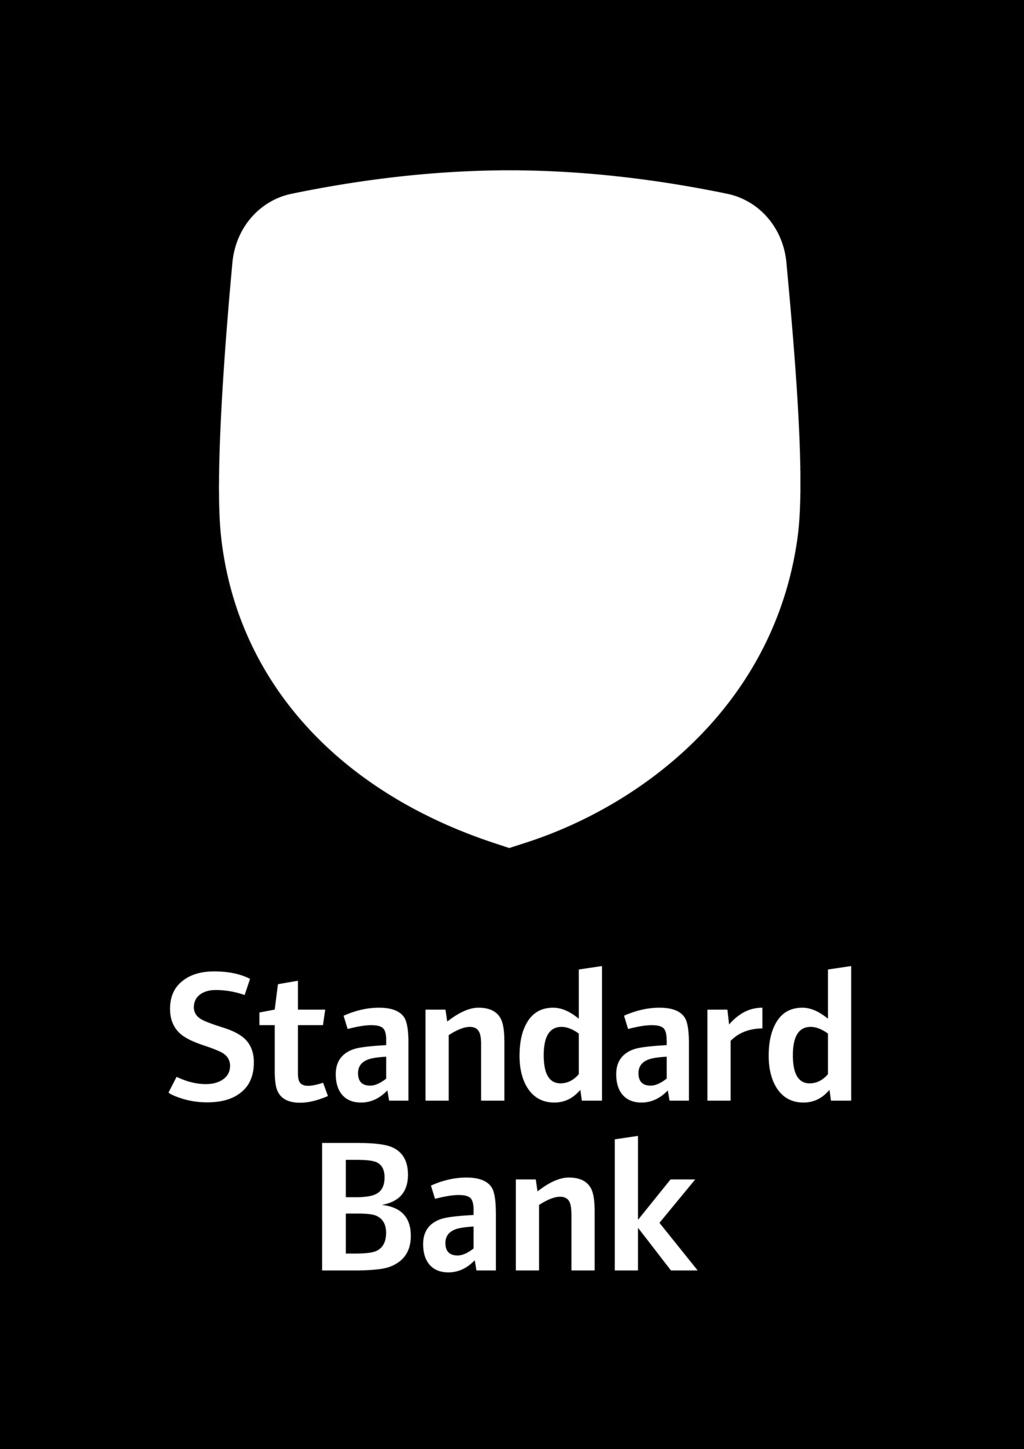 Sandard Bank e em www.standardbank.co.ao.